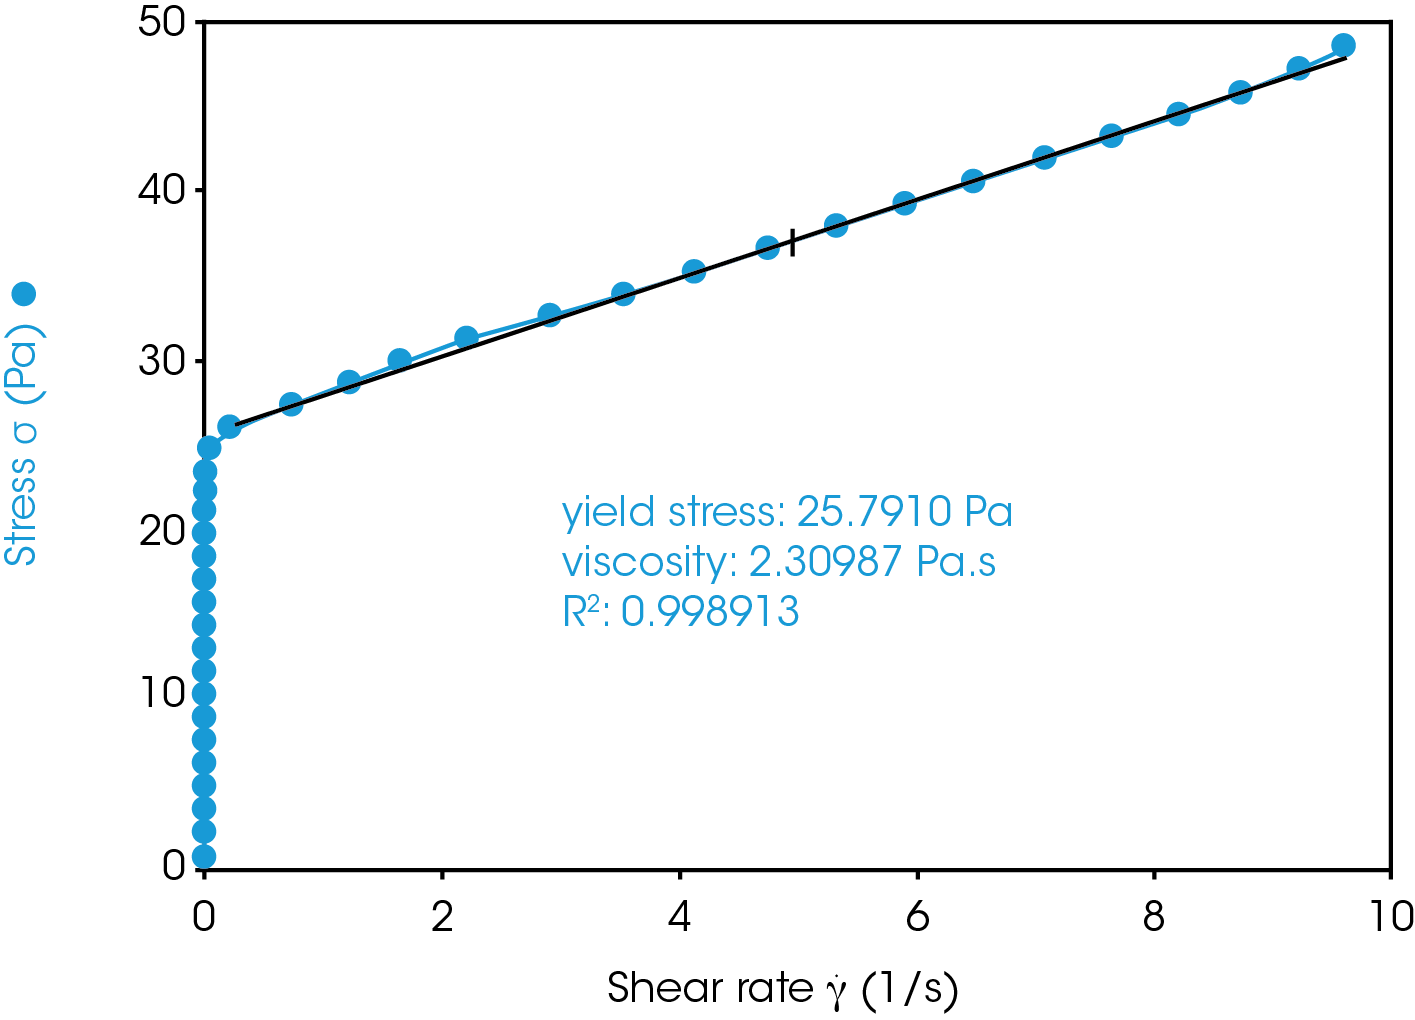 Figure 5. Stress ramp to determine yield stress of plain non-fat Greek yogurt. The yield stress is the intercept of the line, 25.8 Pa.